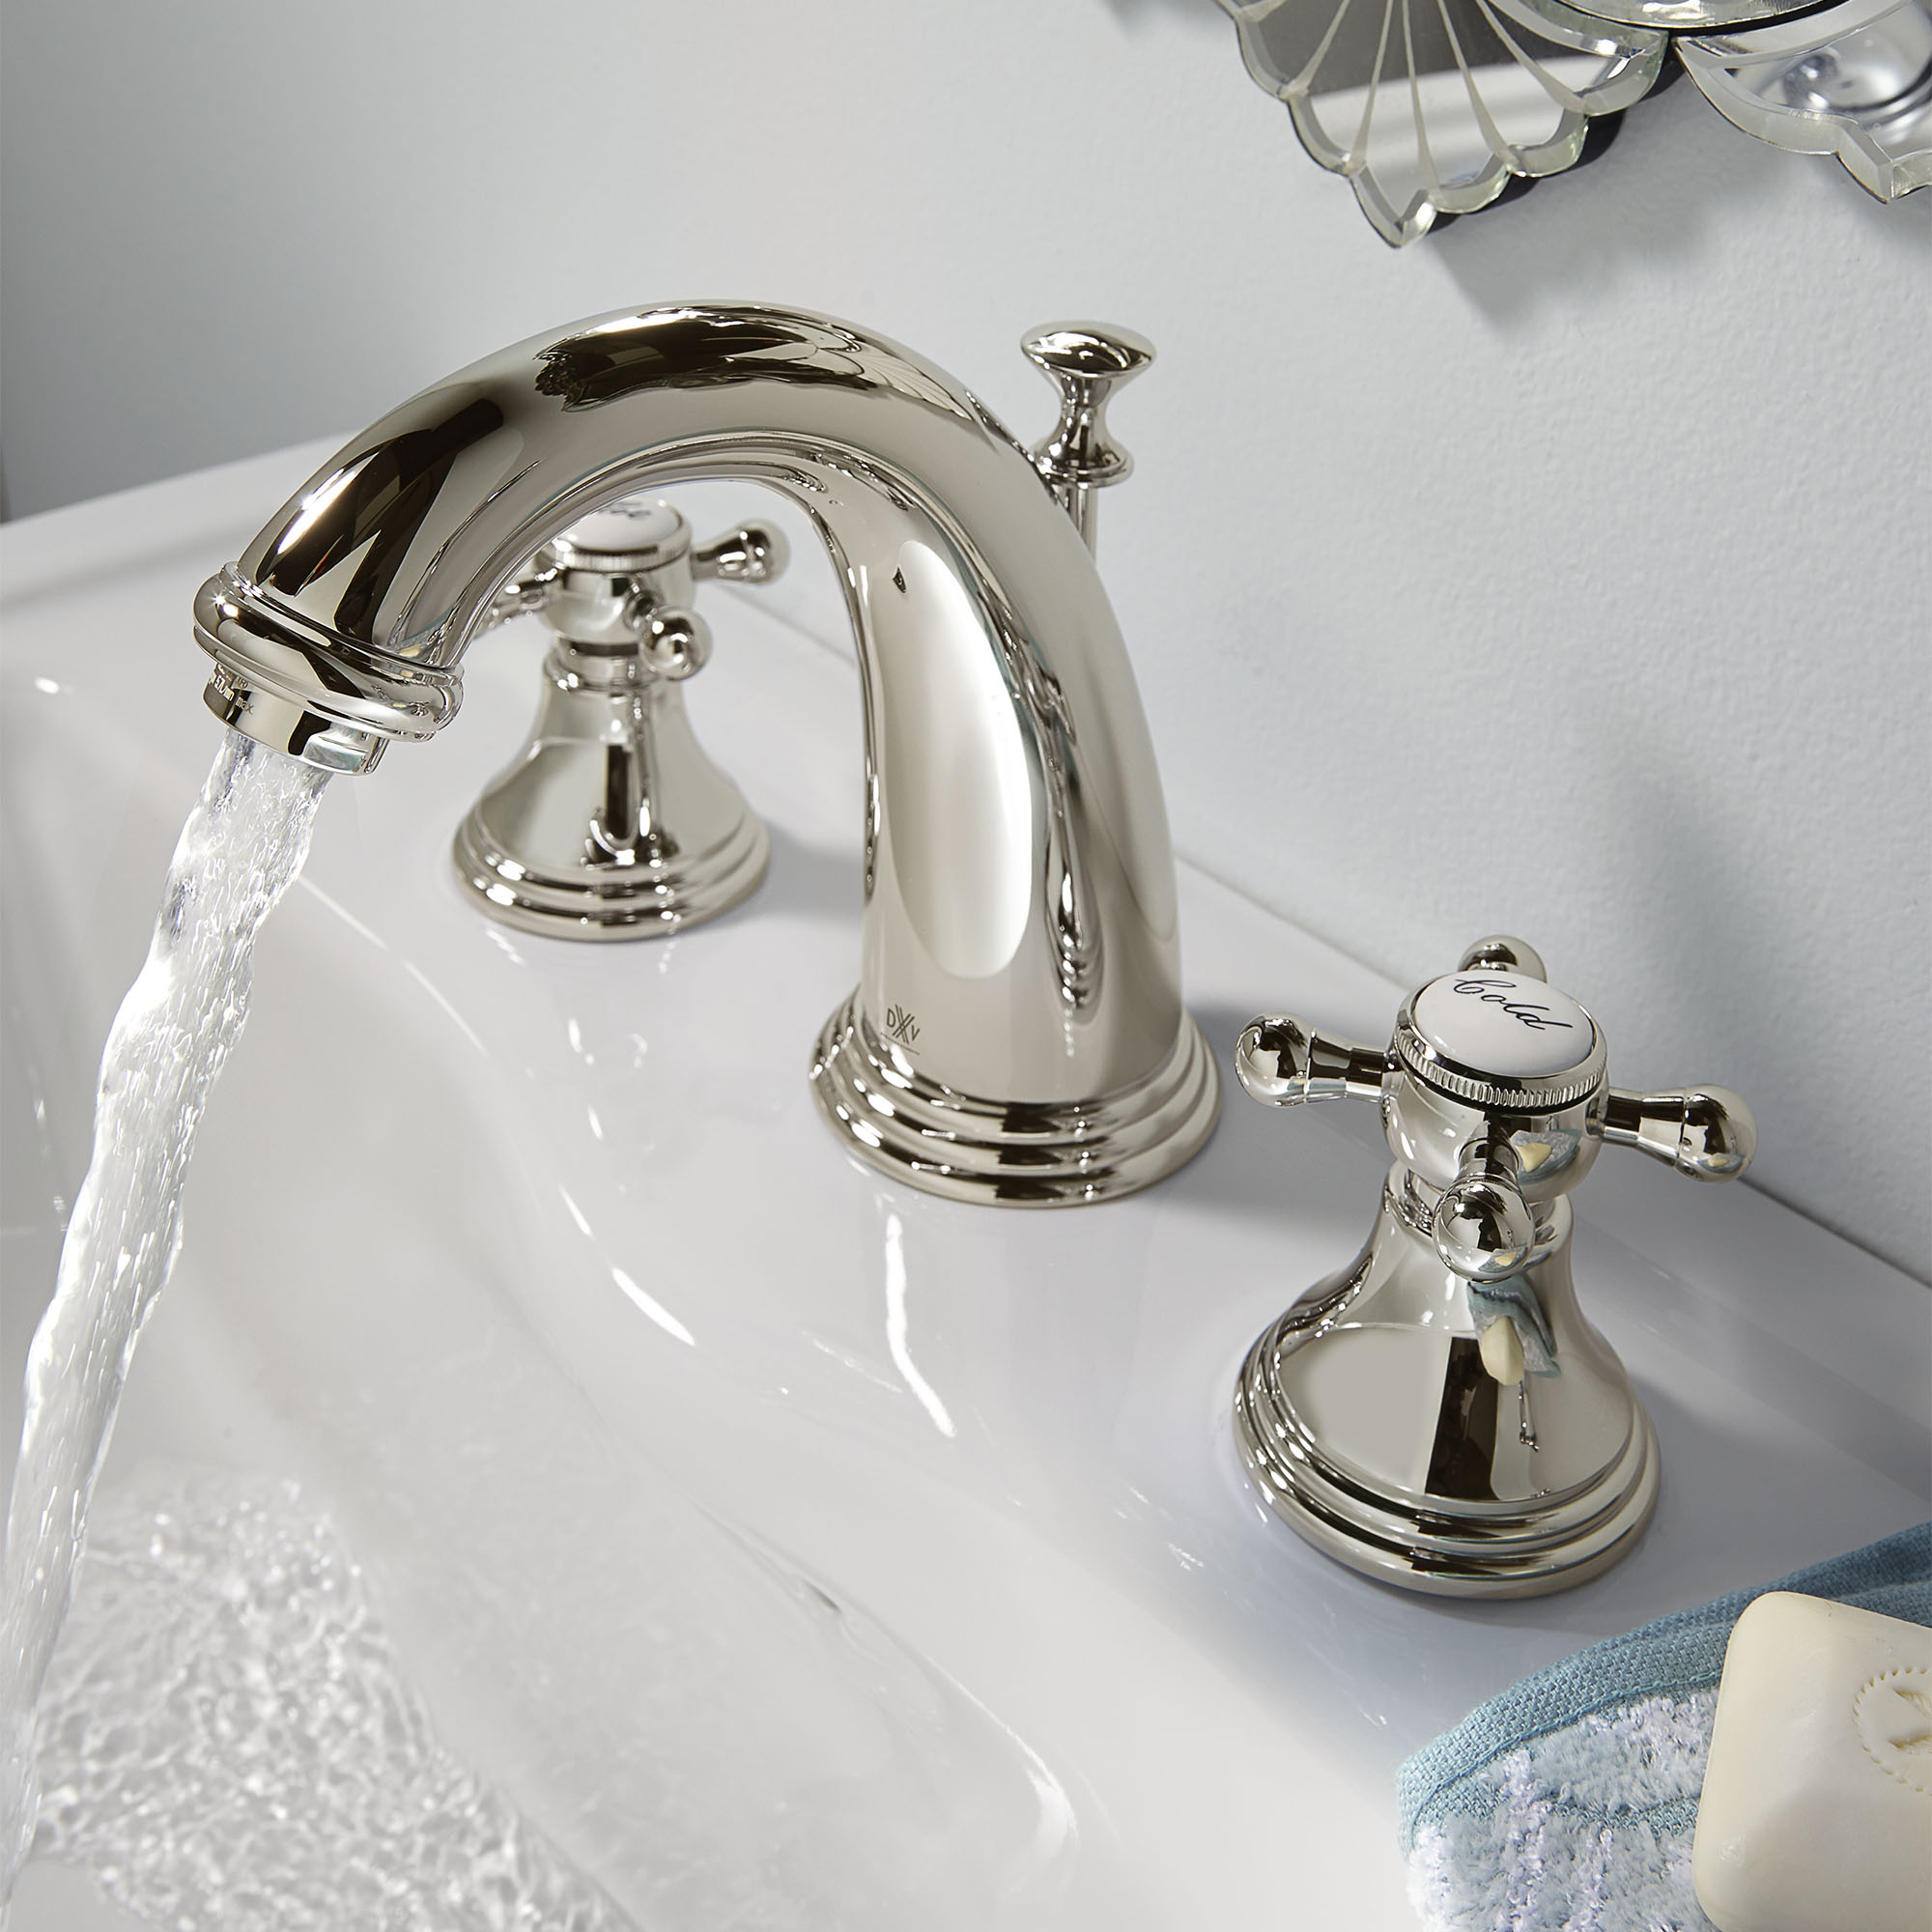 Ashbee® 2-Handle Widespread Bathroom Faucet with Cross Handles